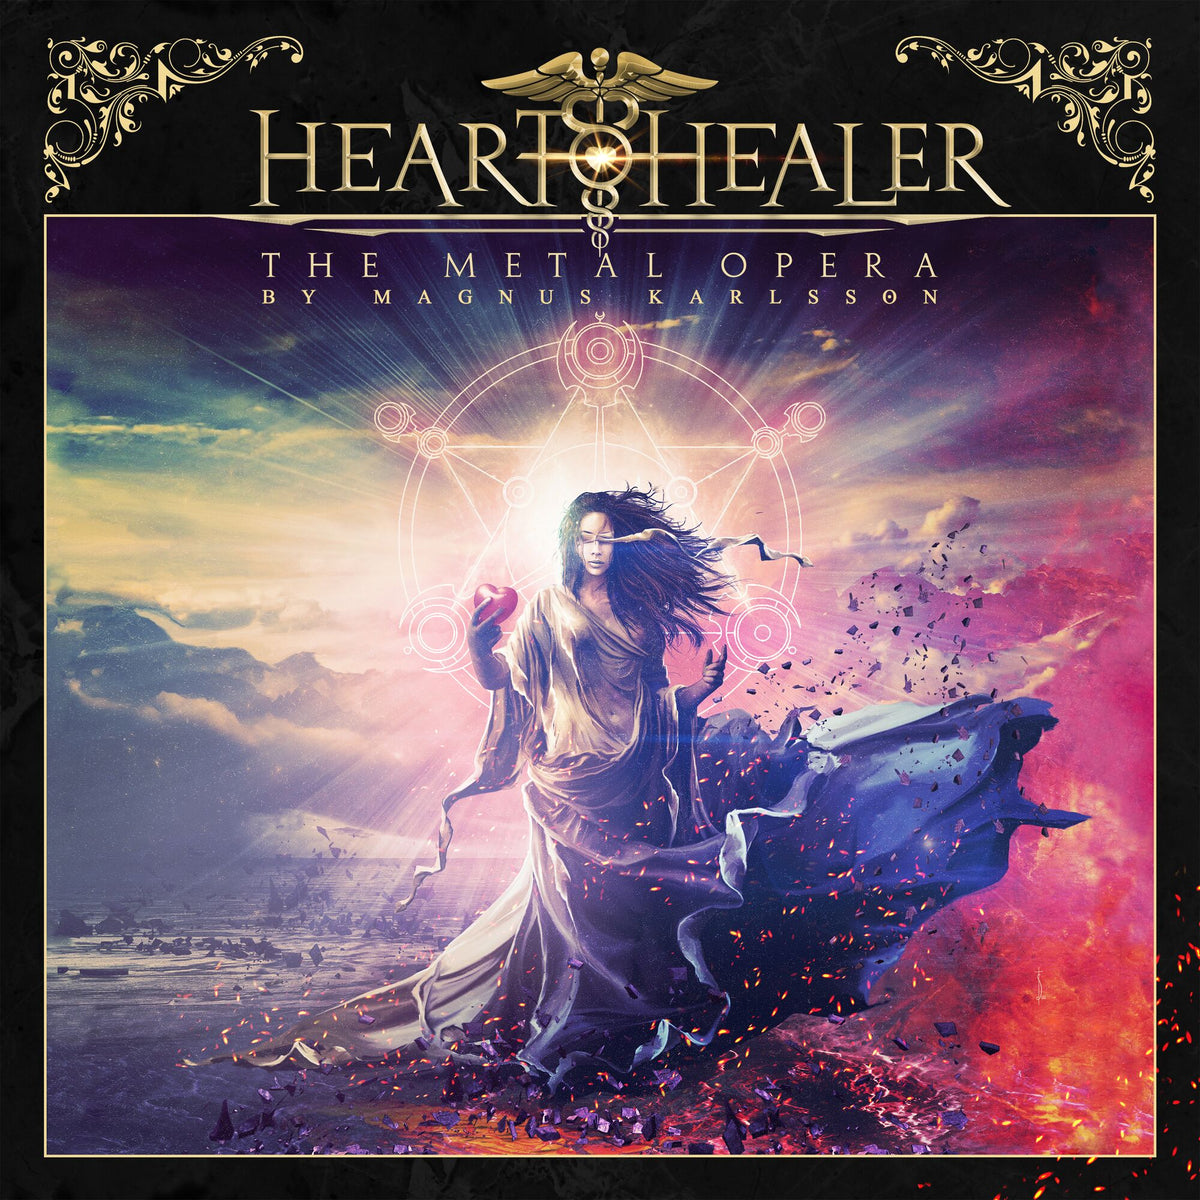 Heart Healer - The Metal Opera by Magnus Karlsson - FRCD1096